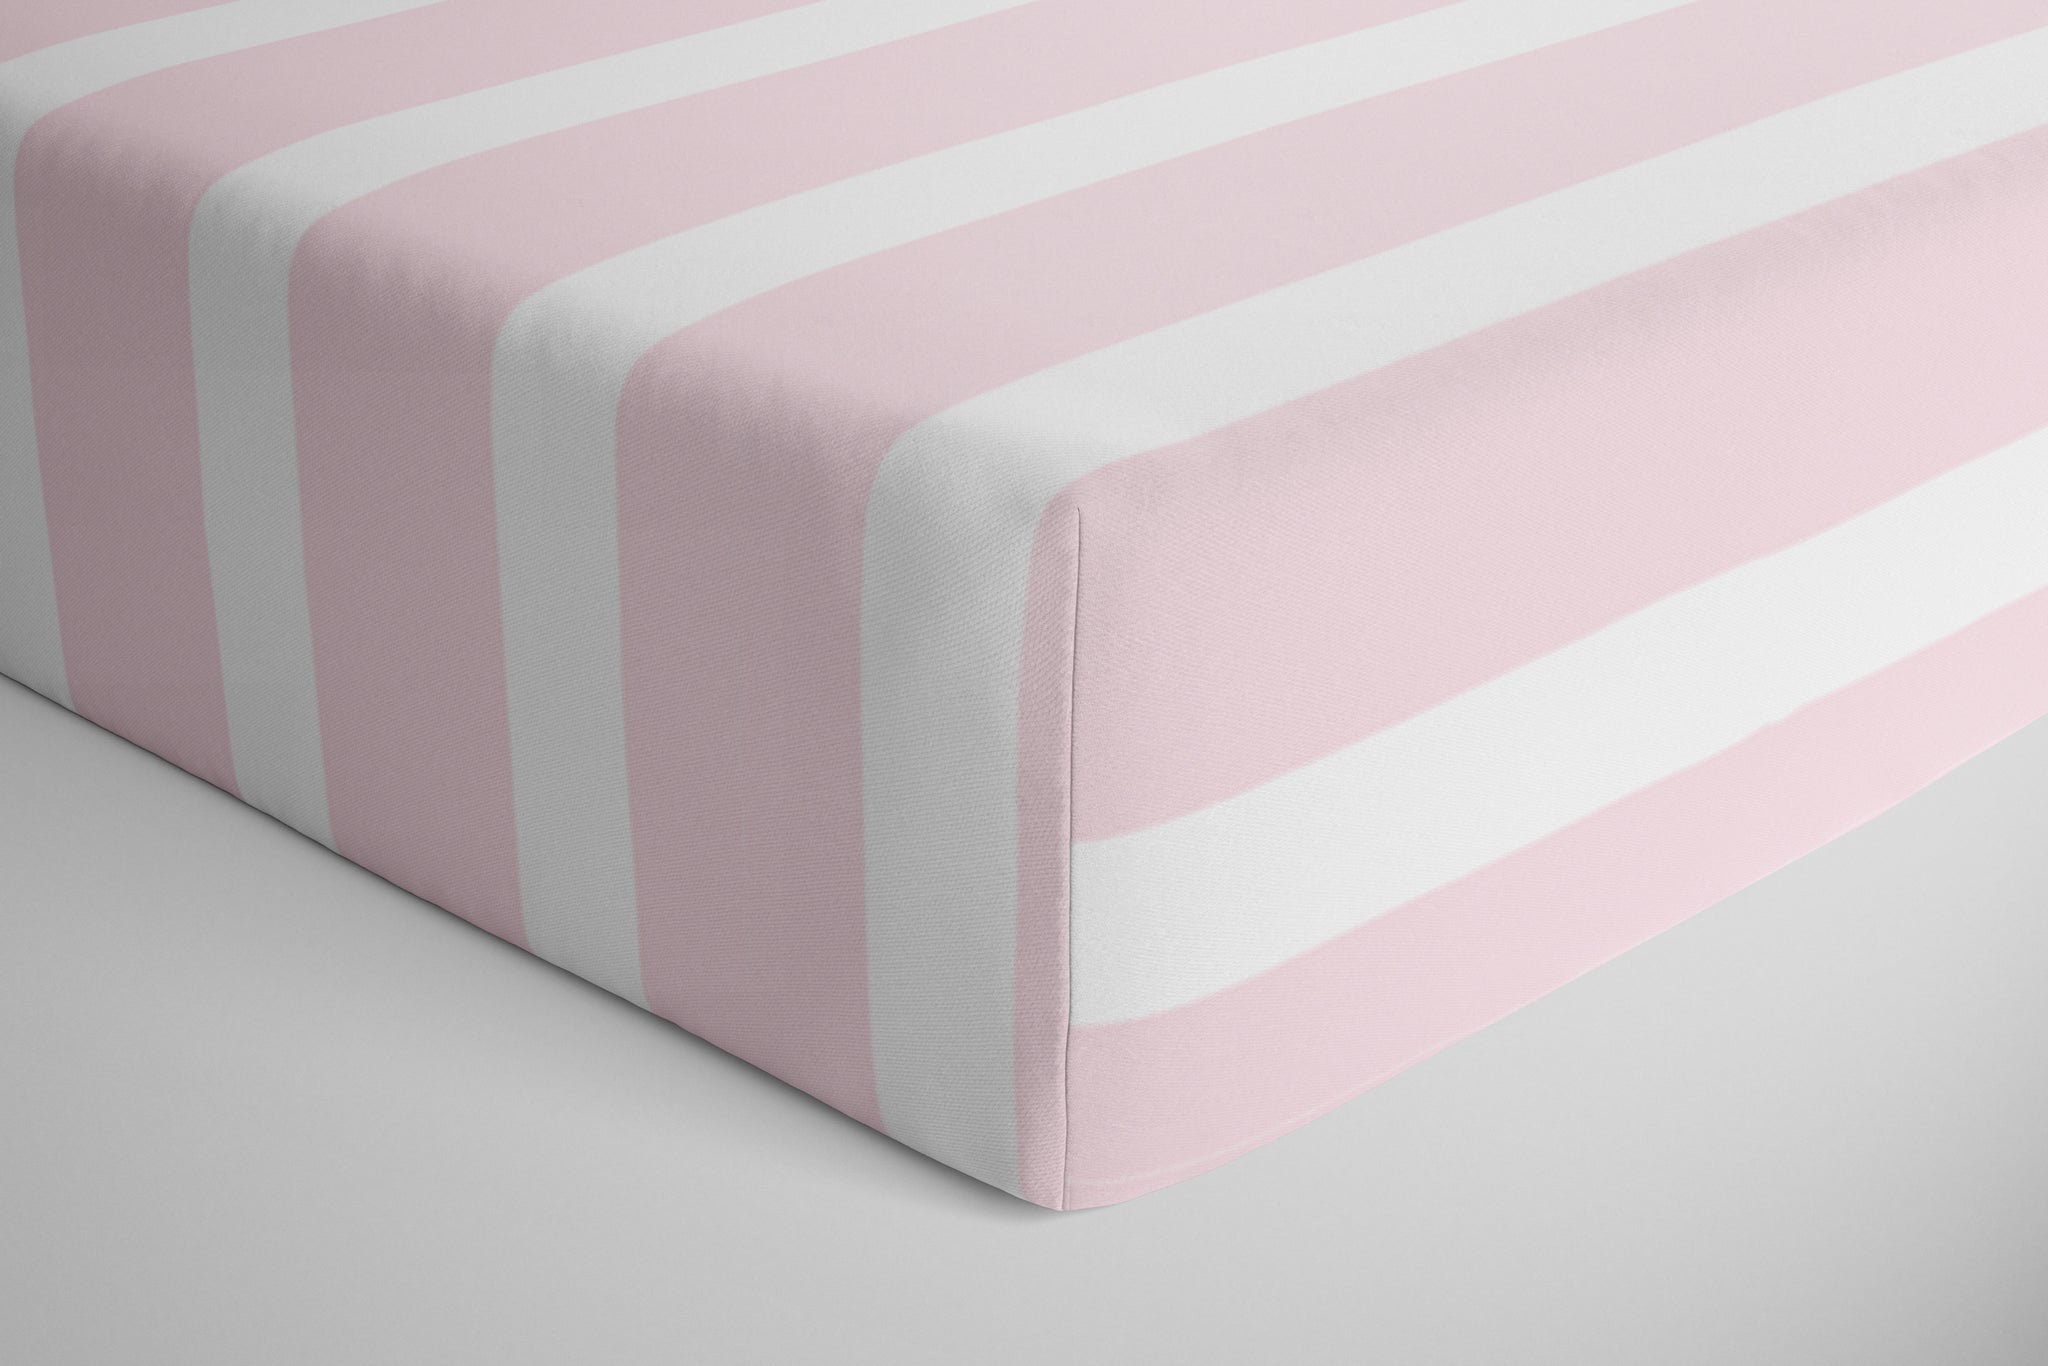 striped crib sheet